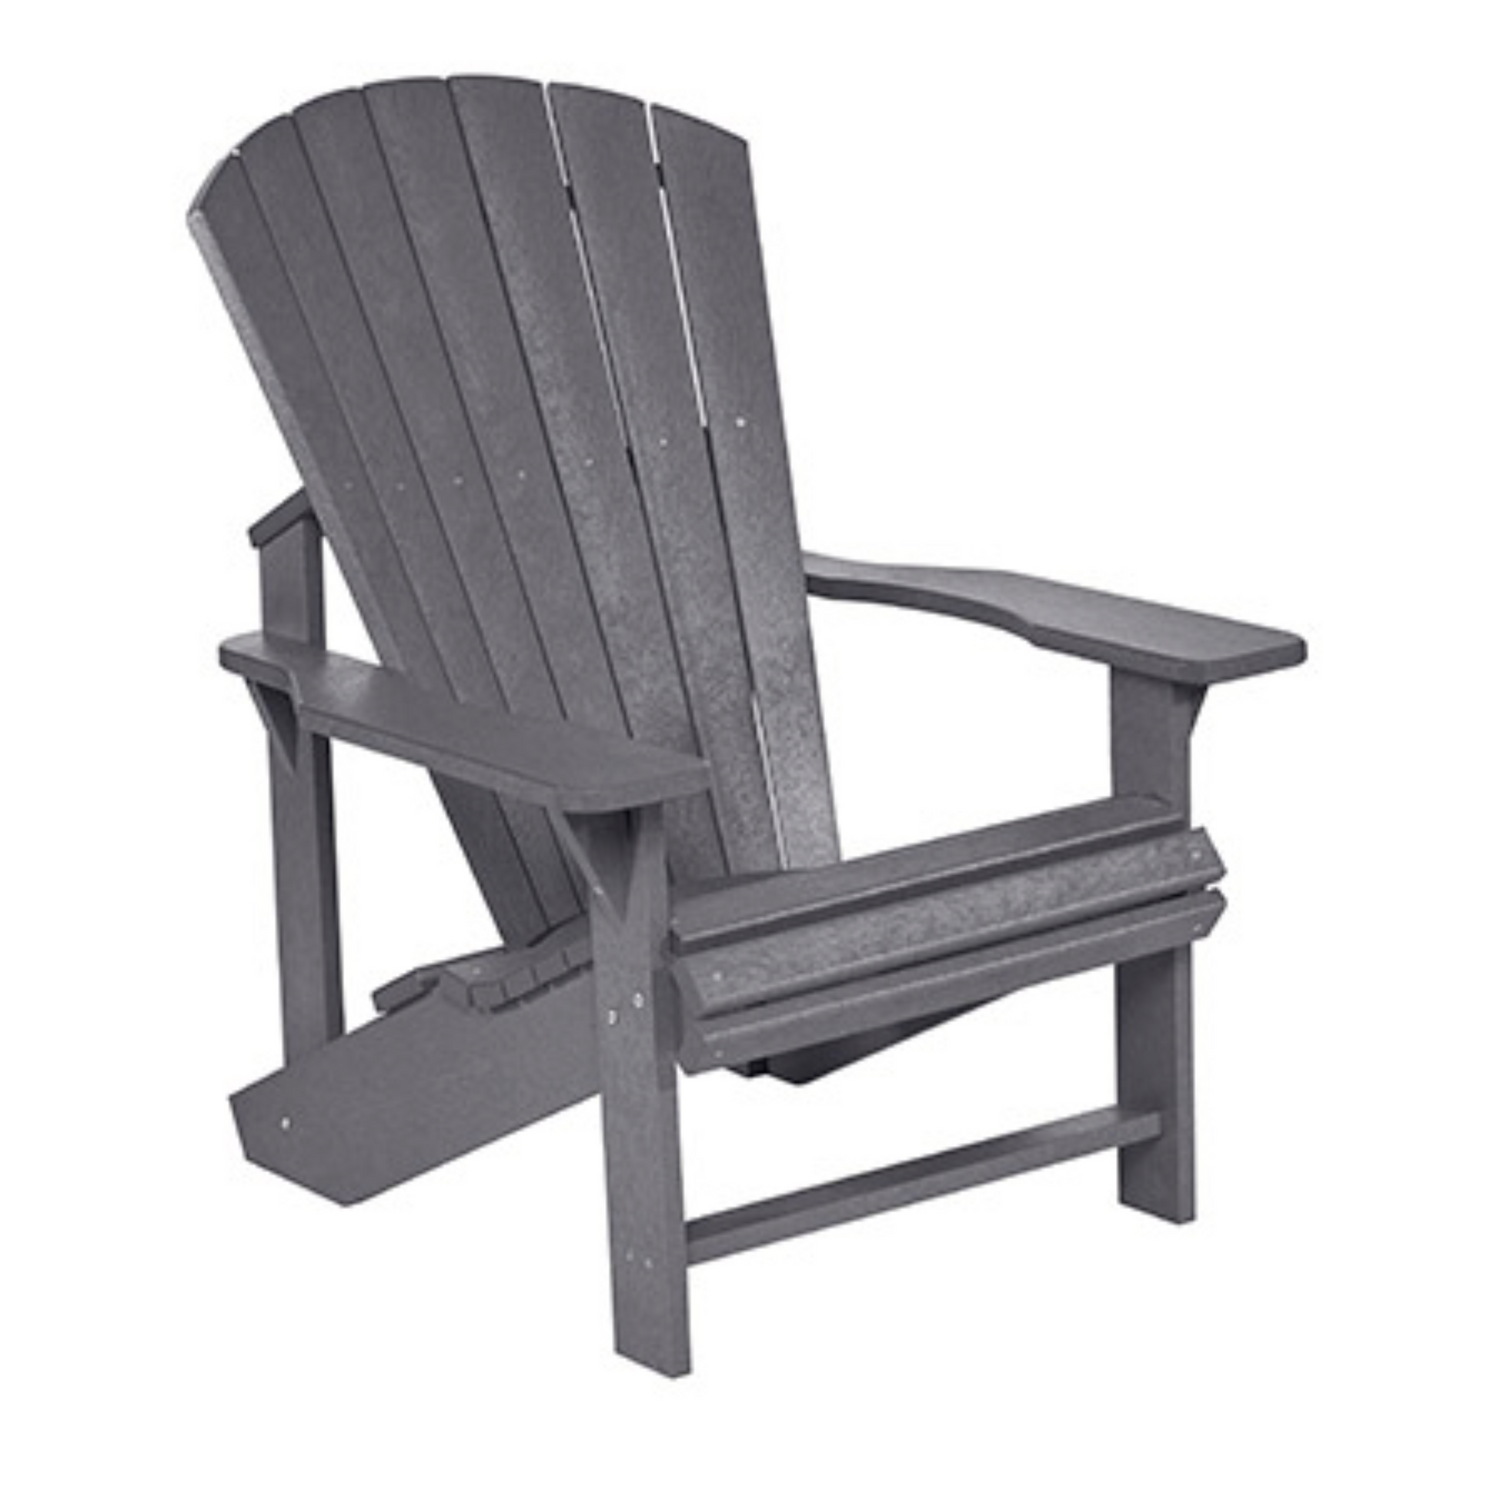 C.R.P. Upright Adirondack Chair In Slate Grey